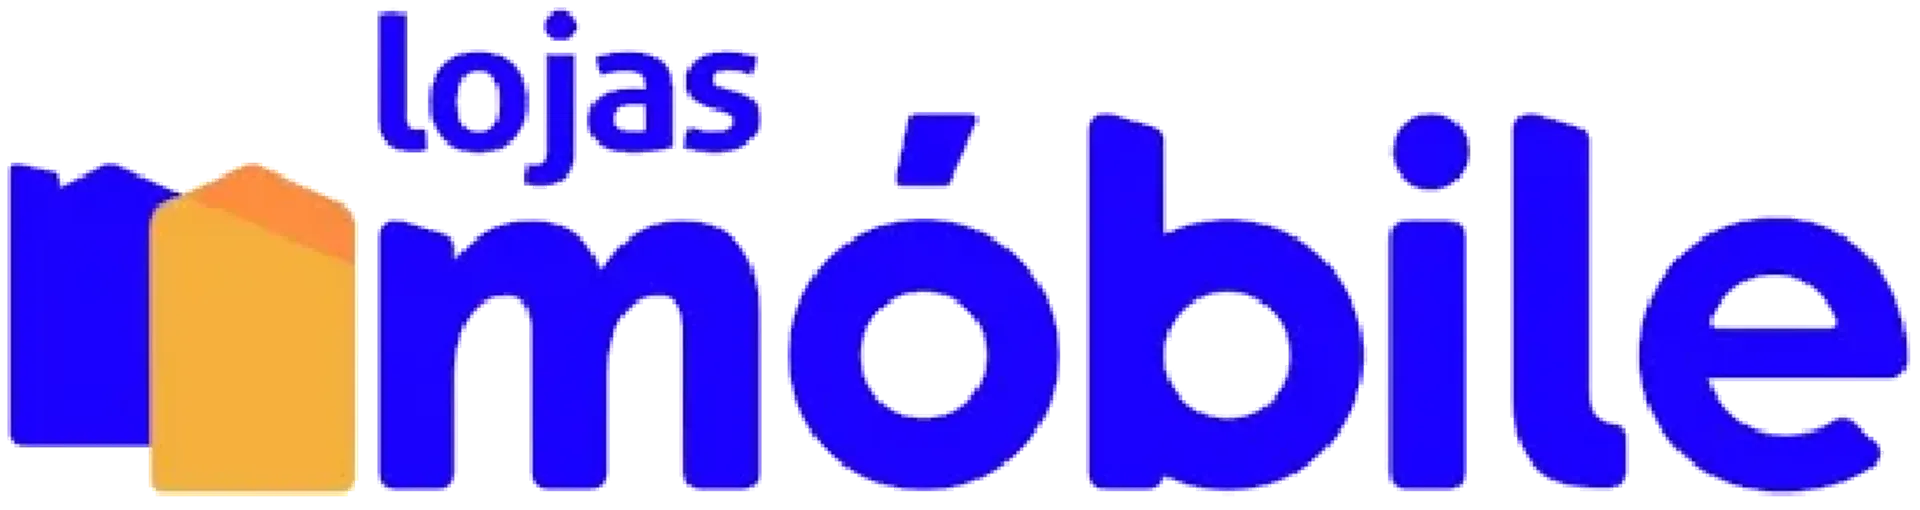 MÓBILE logo